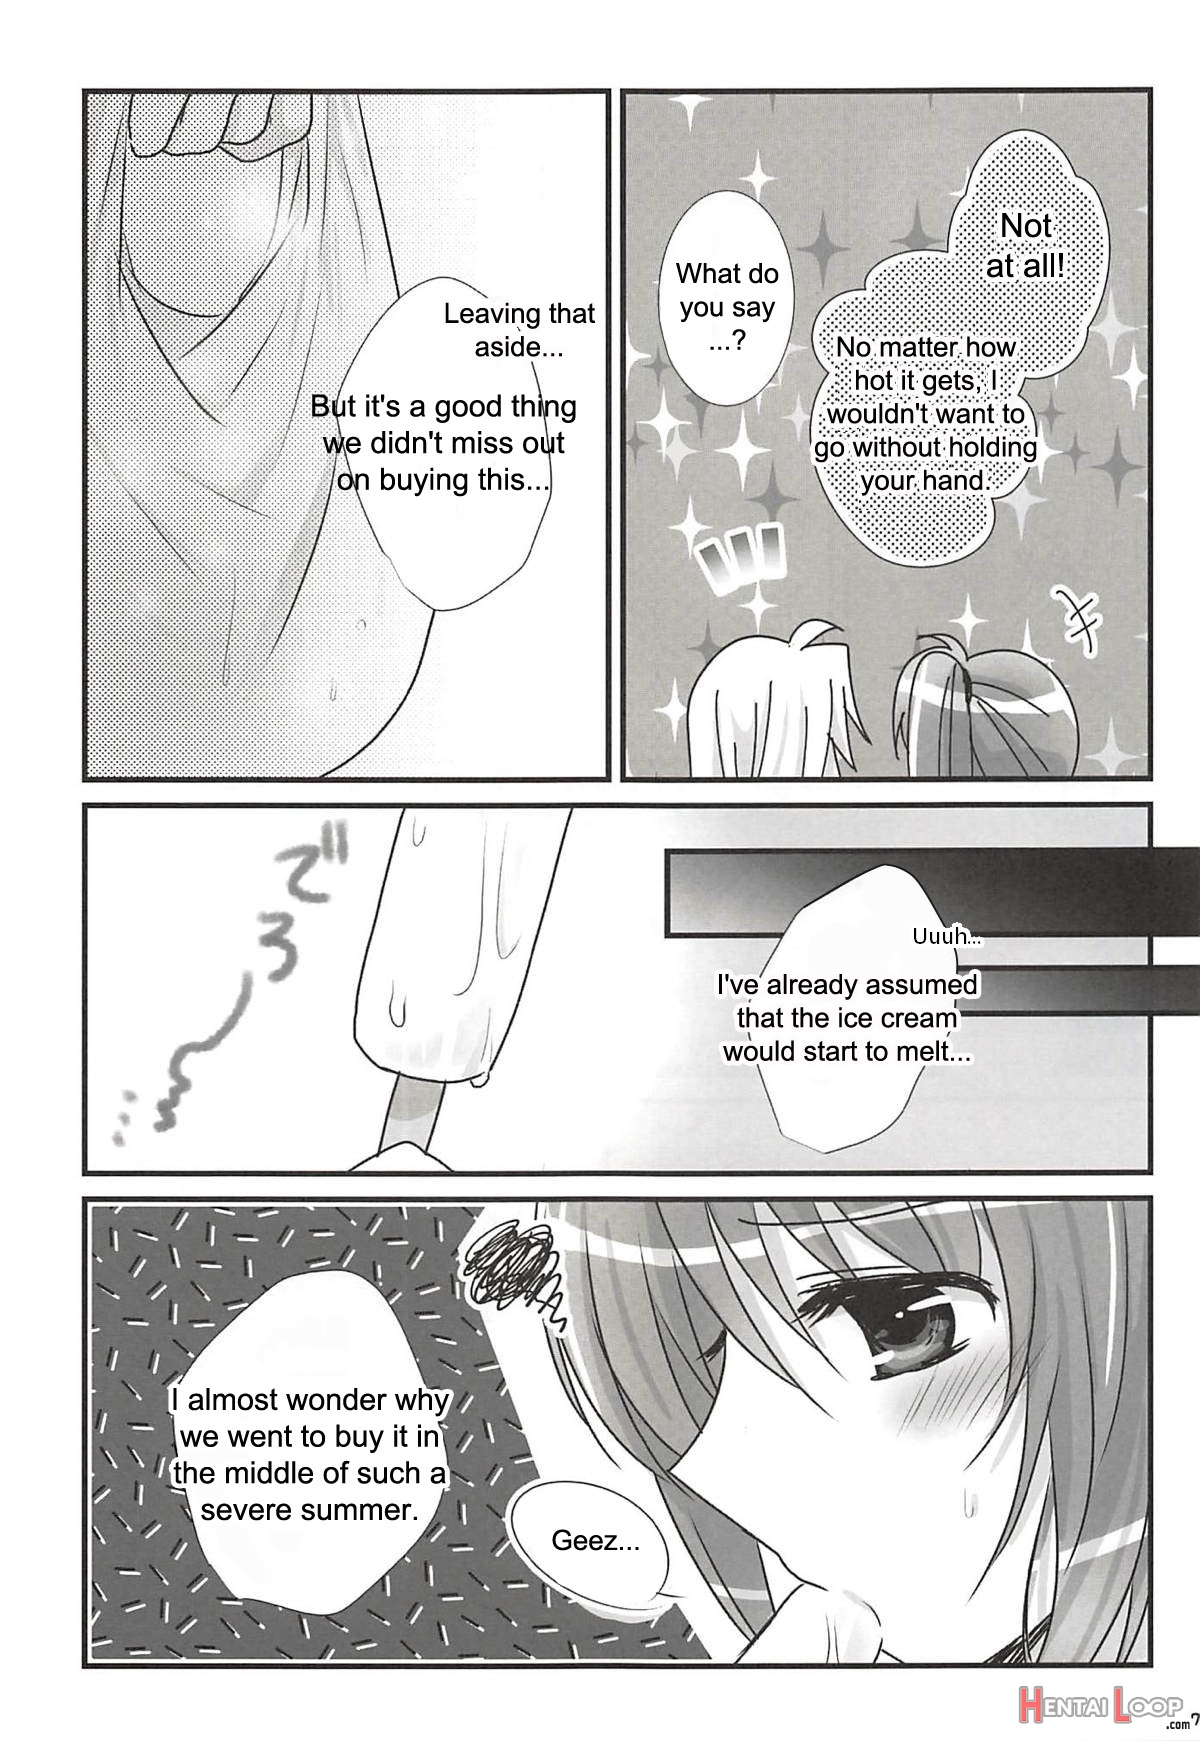 Natsudoke page 6